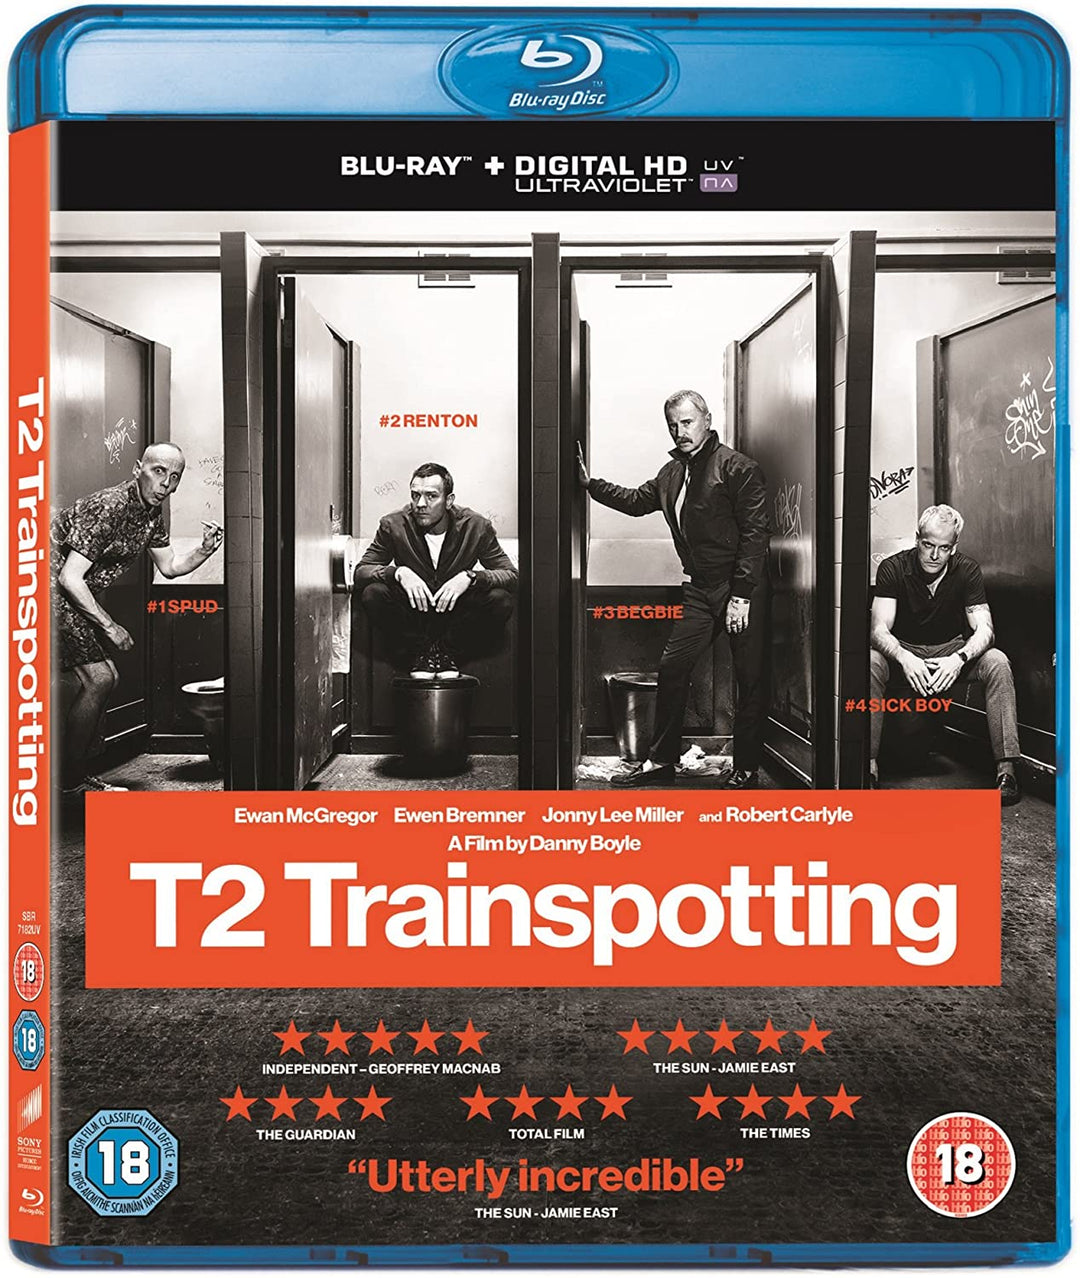 T2 Trainspotting [Blu-ray] [2017] [Region Free]